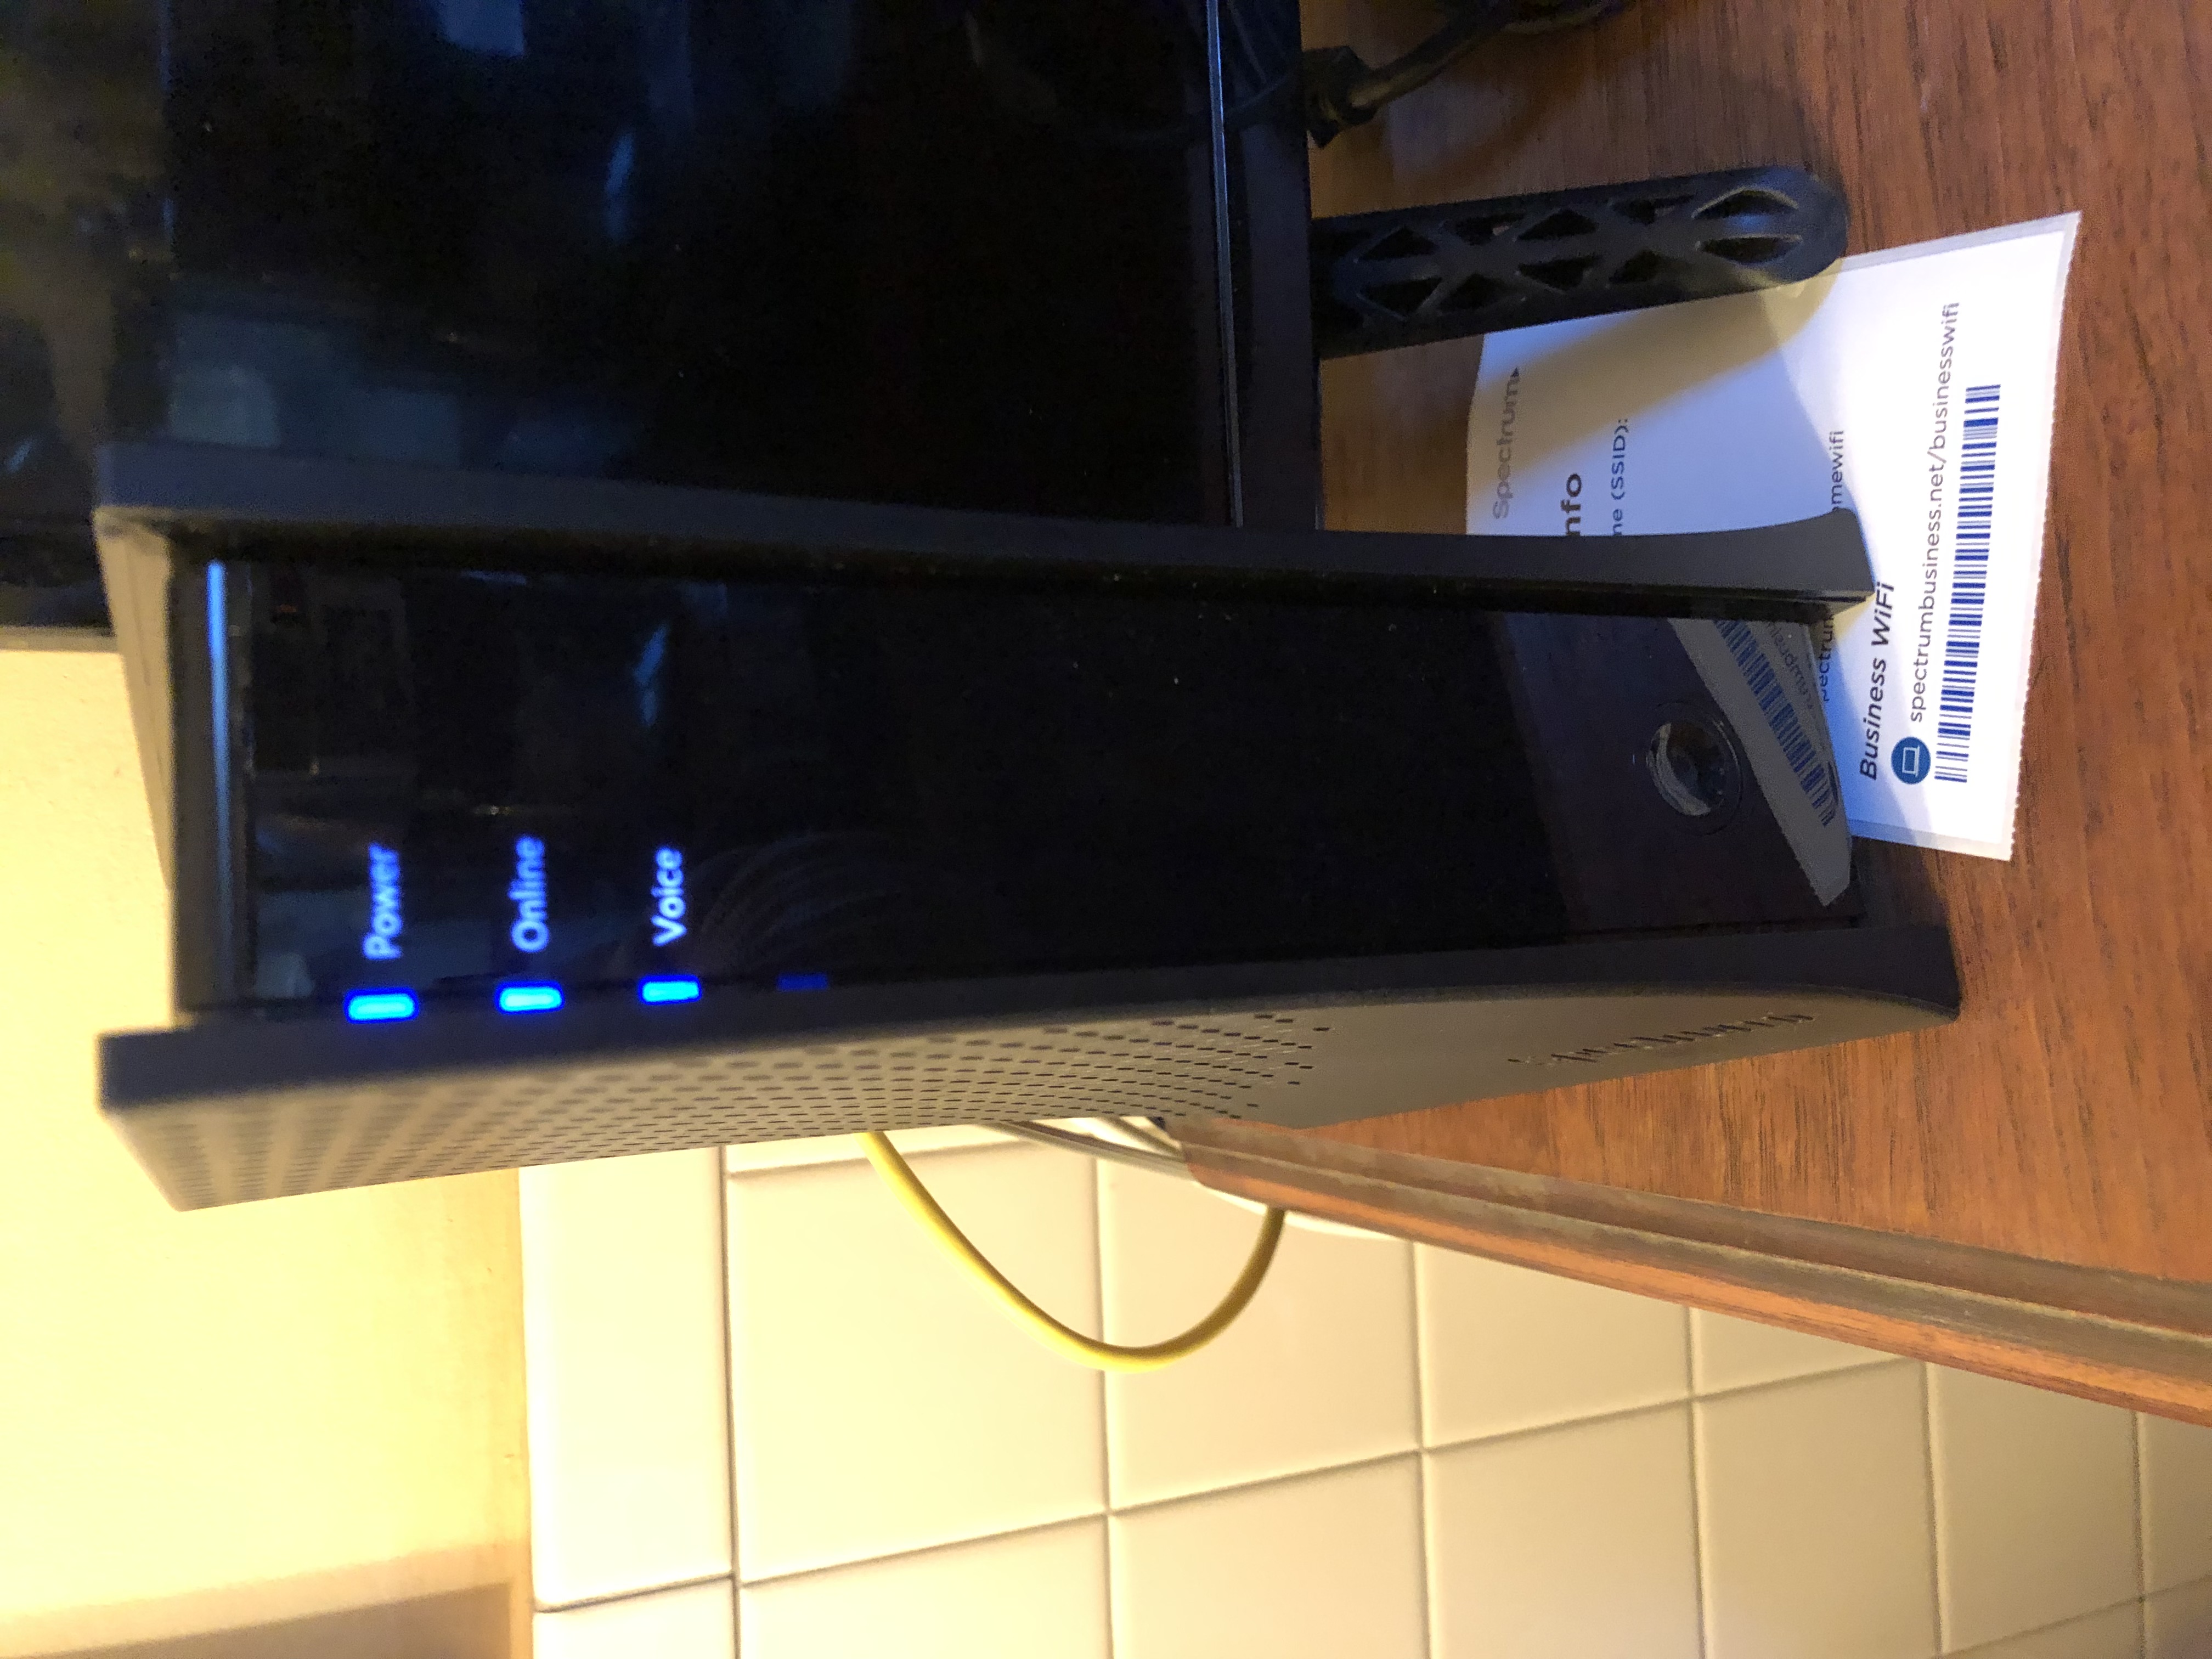 Orbi RBK44 and Spectrum cable modem - NETGEAR Communities